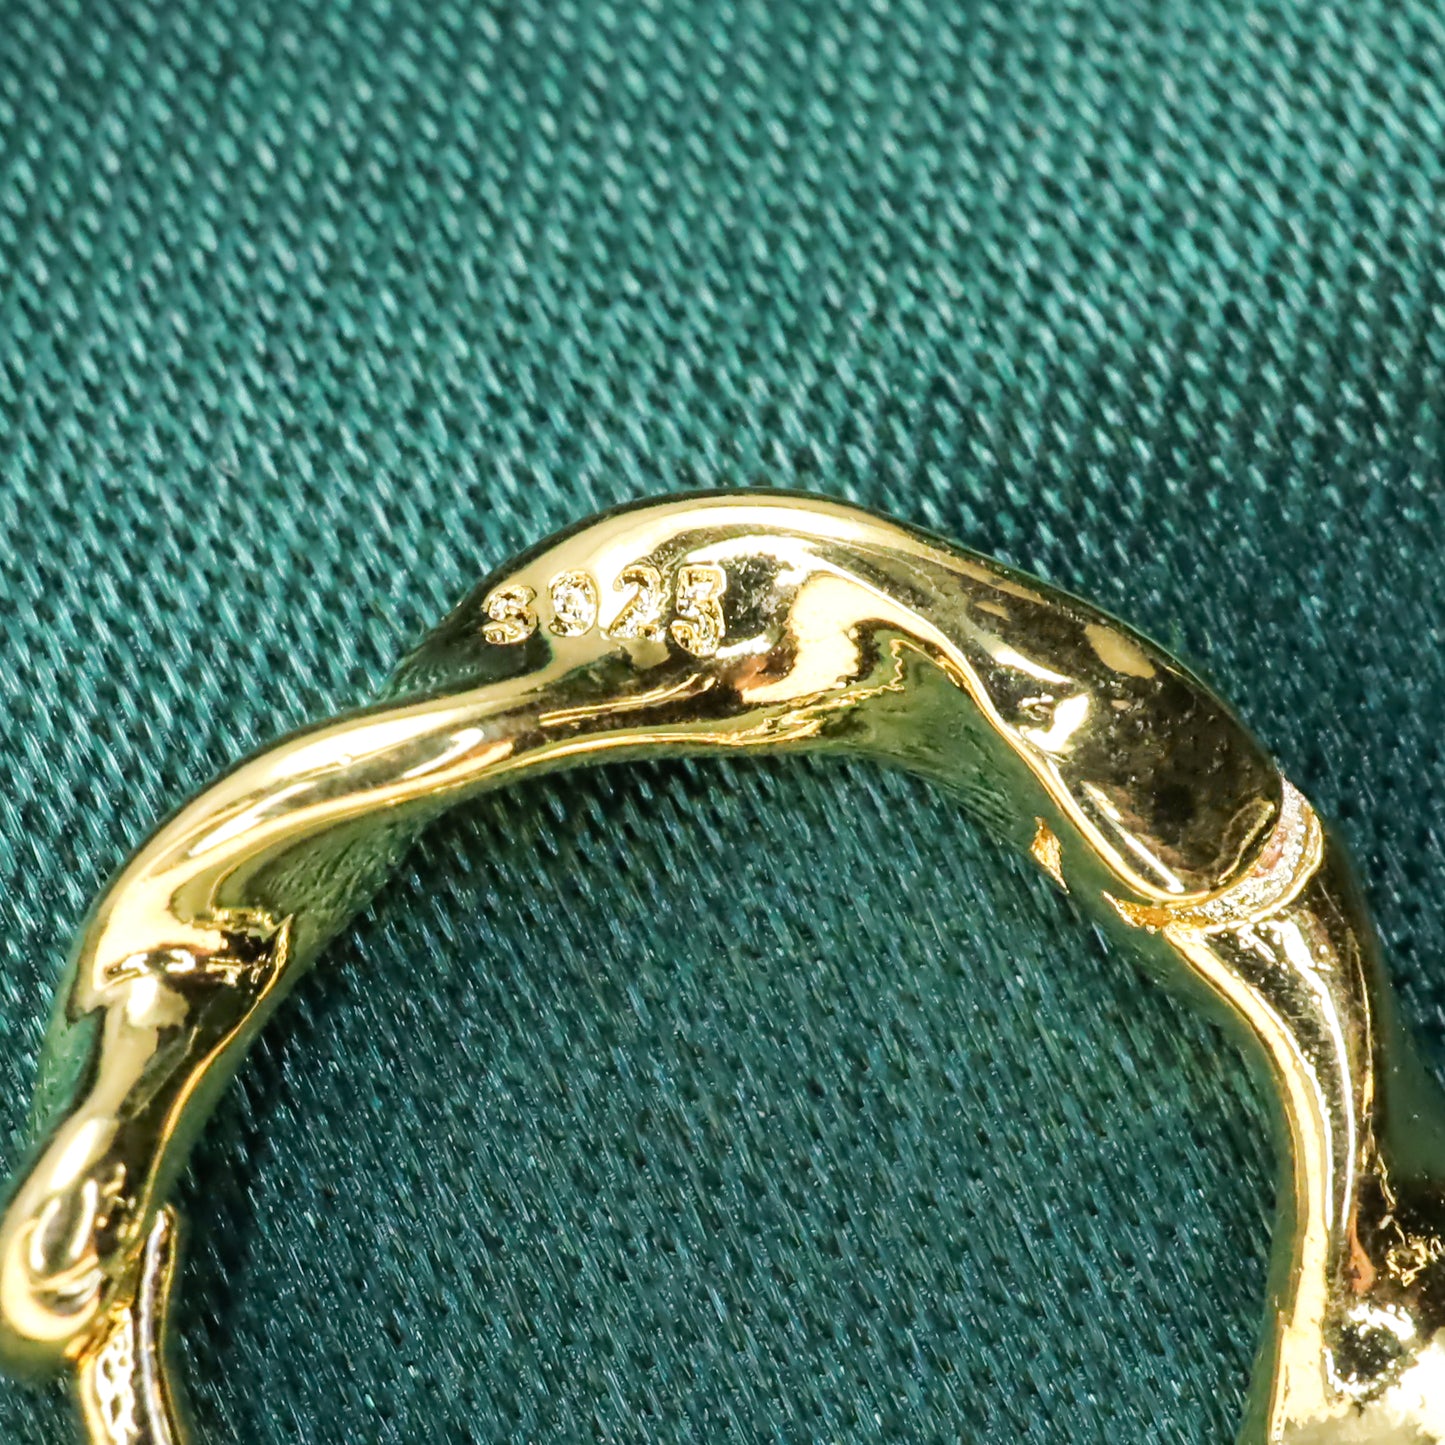 Gaea Circle - S925 Sterling Silver Hoop Earrings (Color: Gold)